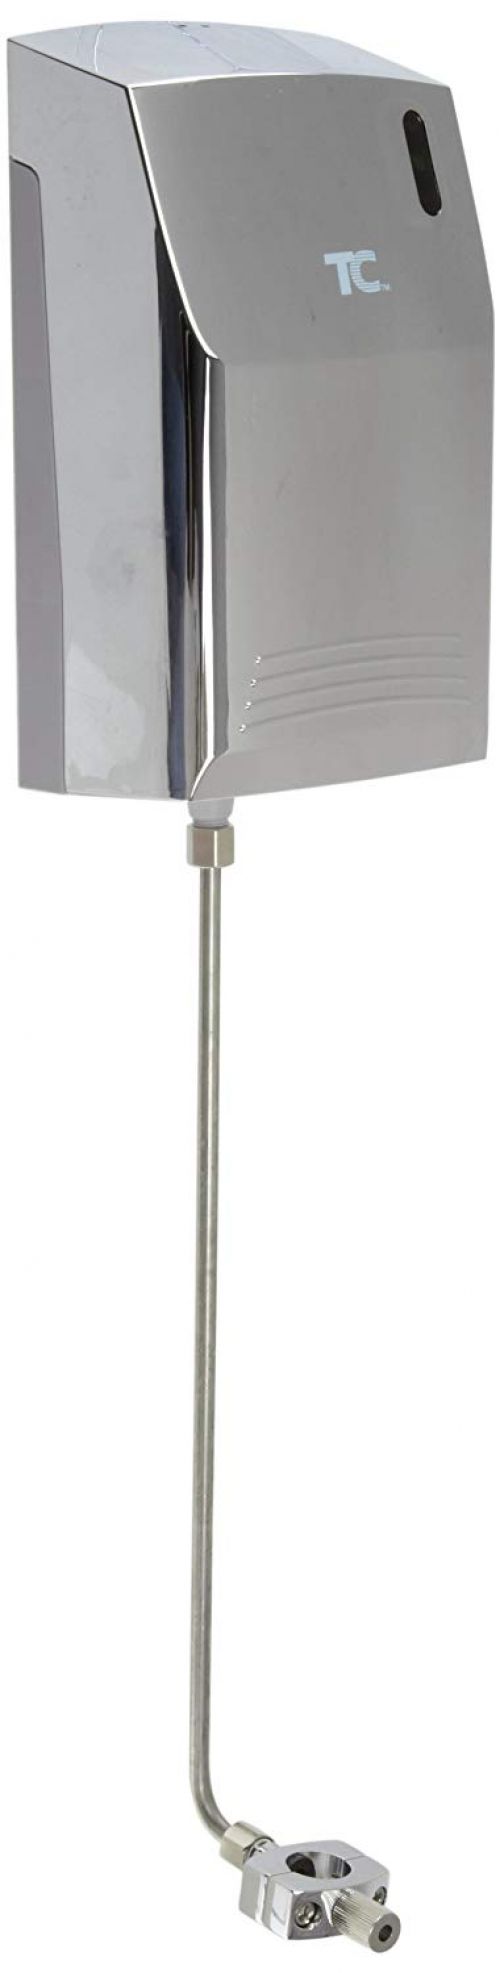 Toilet Cleaner Dispenser Chrome LED Kit With 3/4 Connector